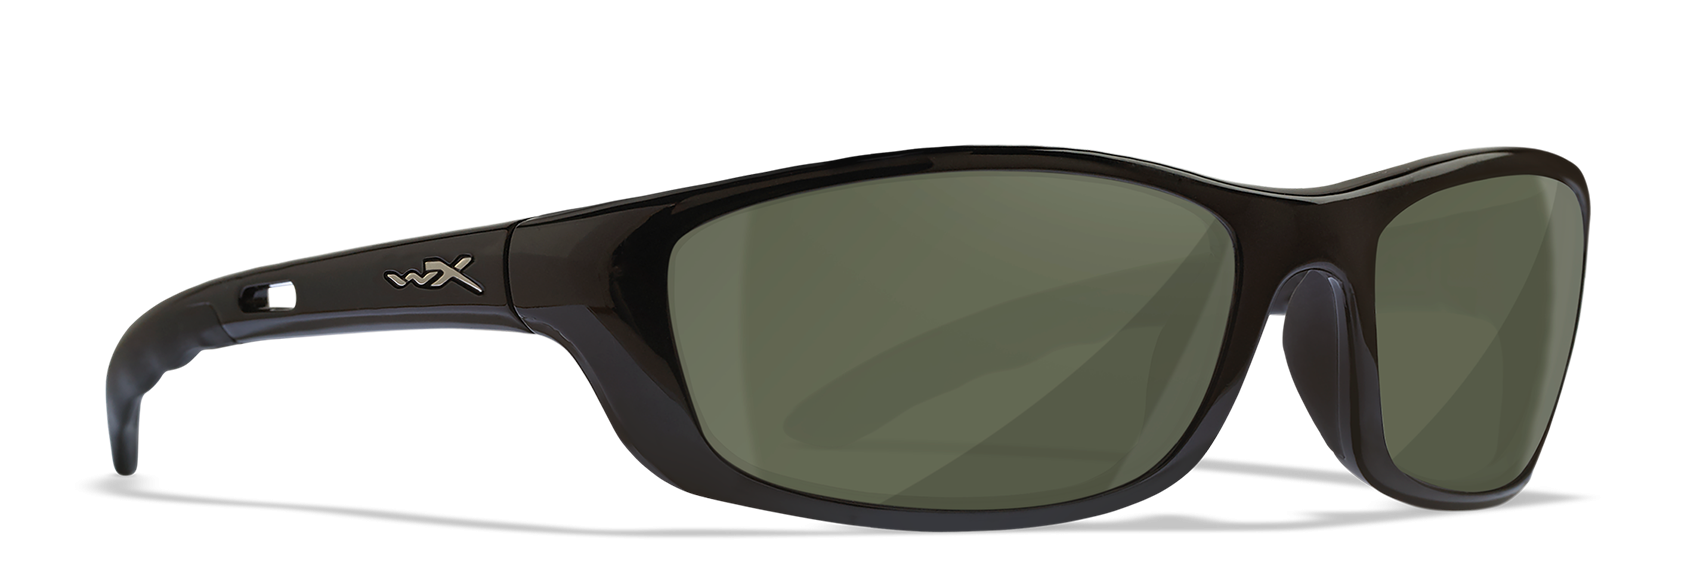 Wiley X P17 Smoke Green Polycarbonate Sunglasses